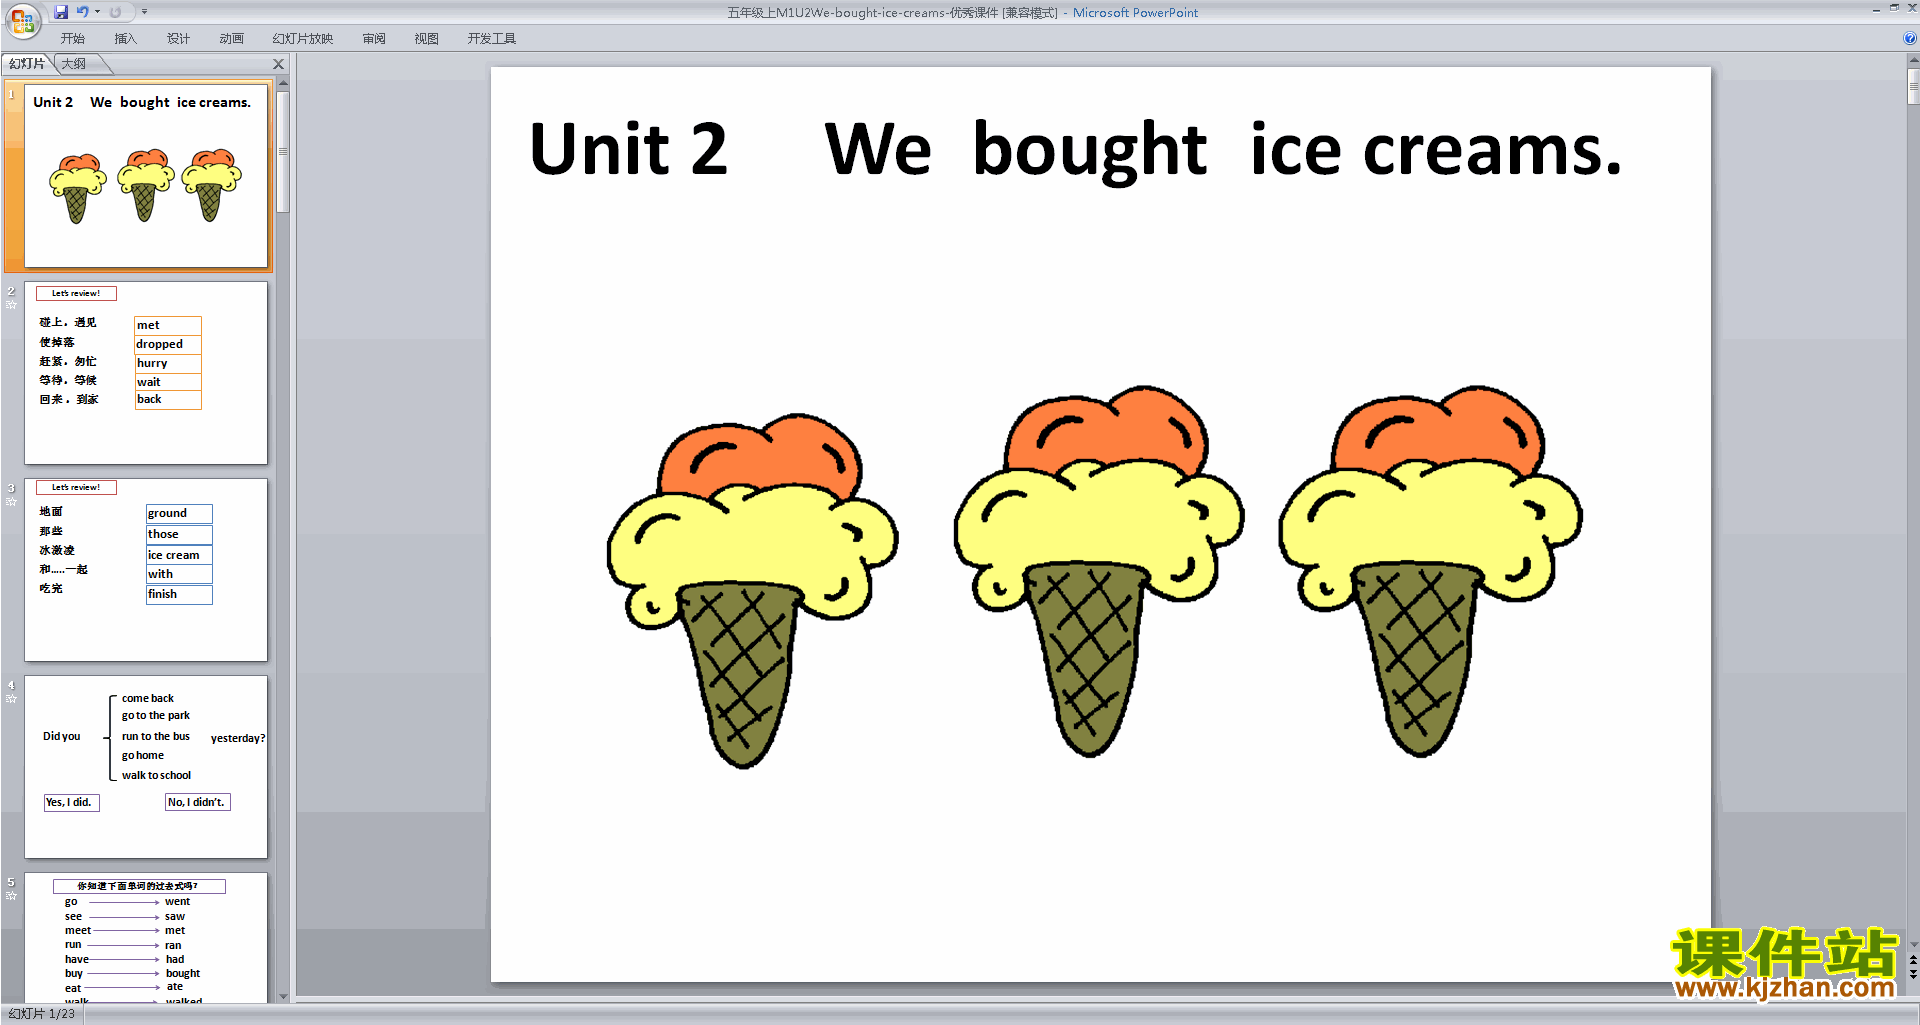 аӢModule1 Unit2 We bought ice creamspptμ15